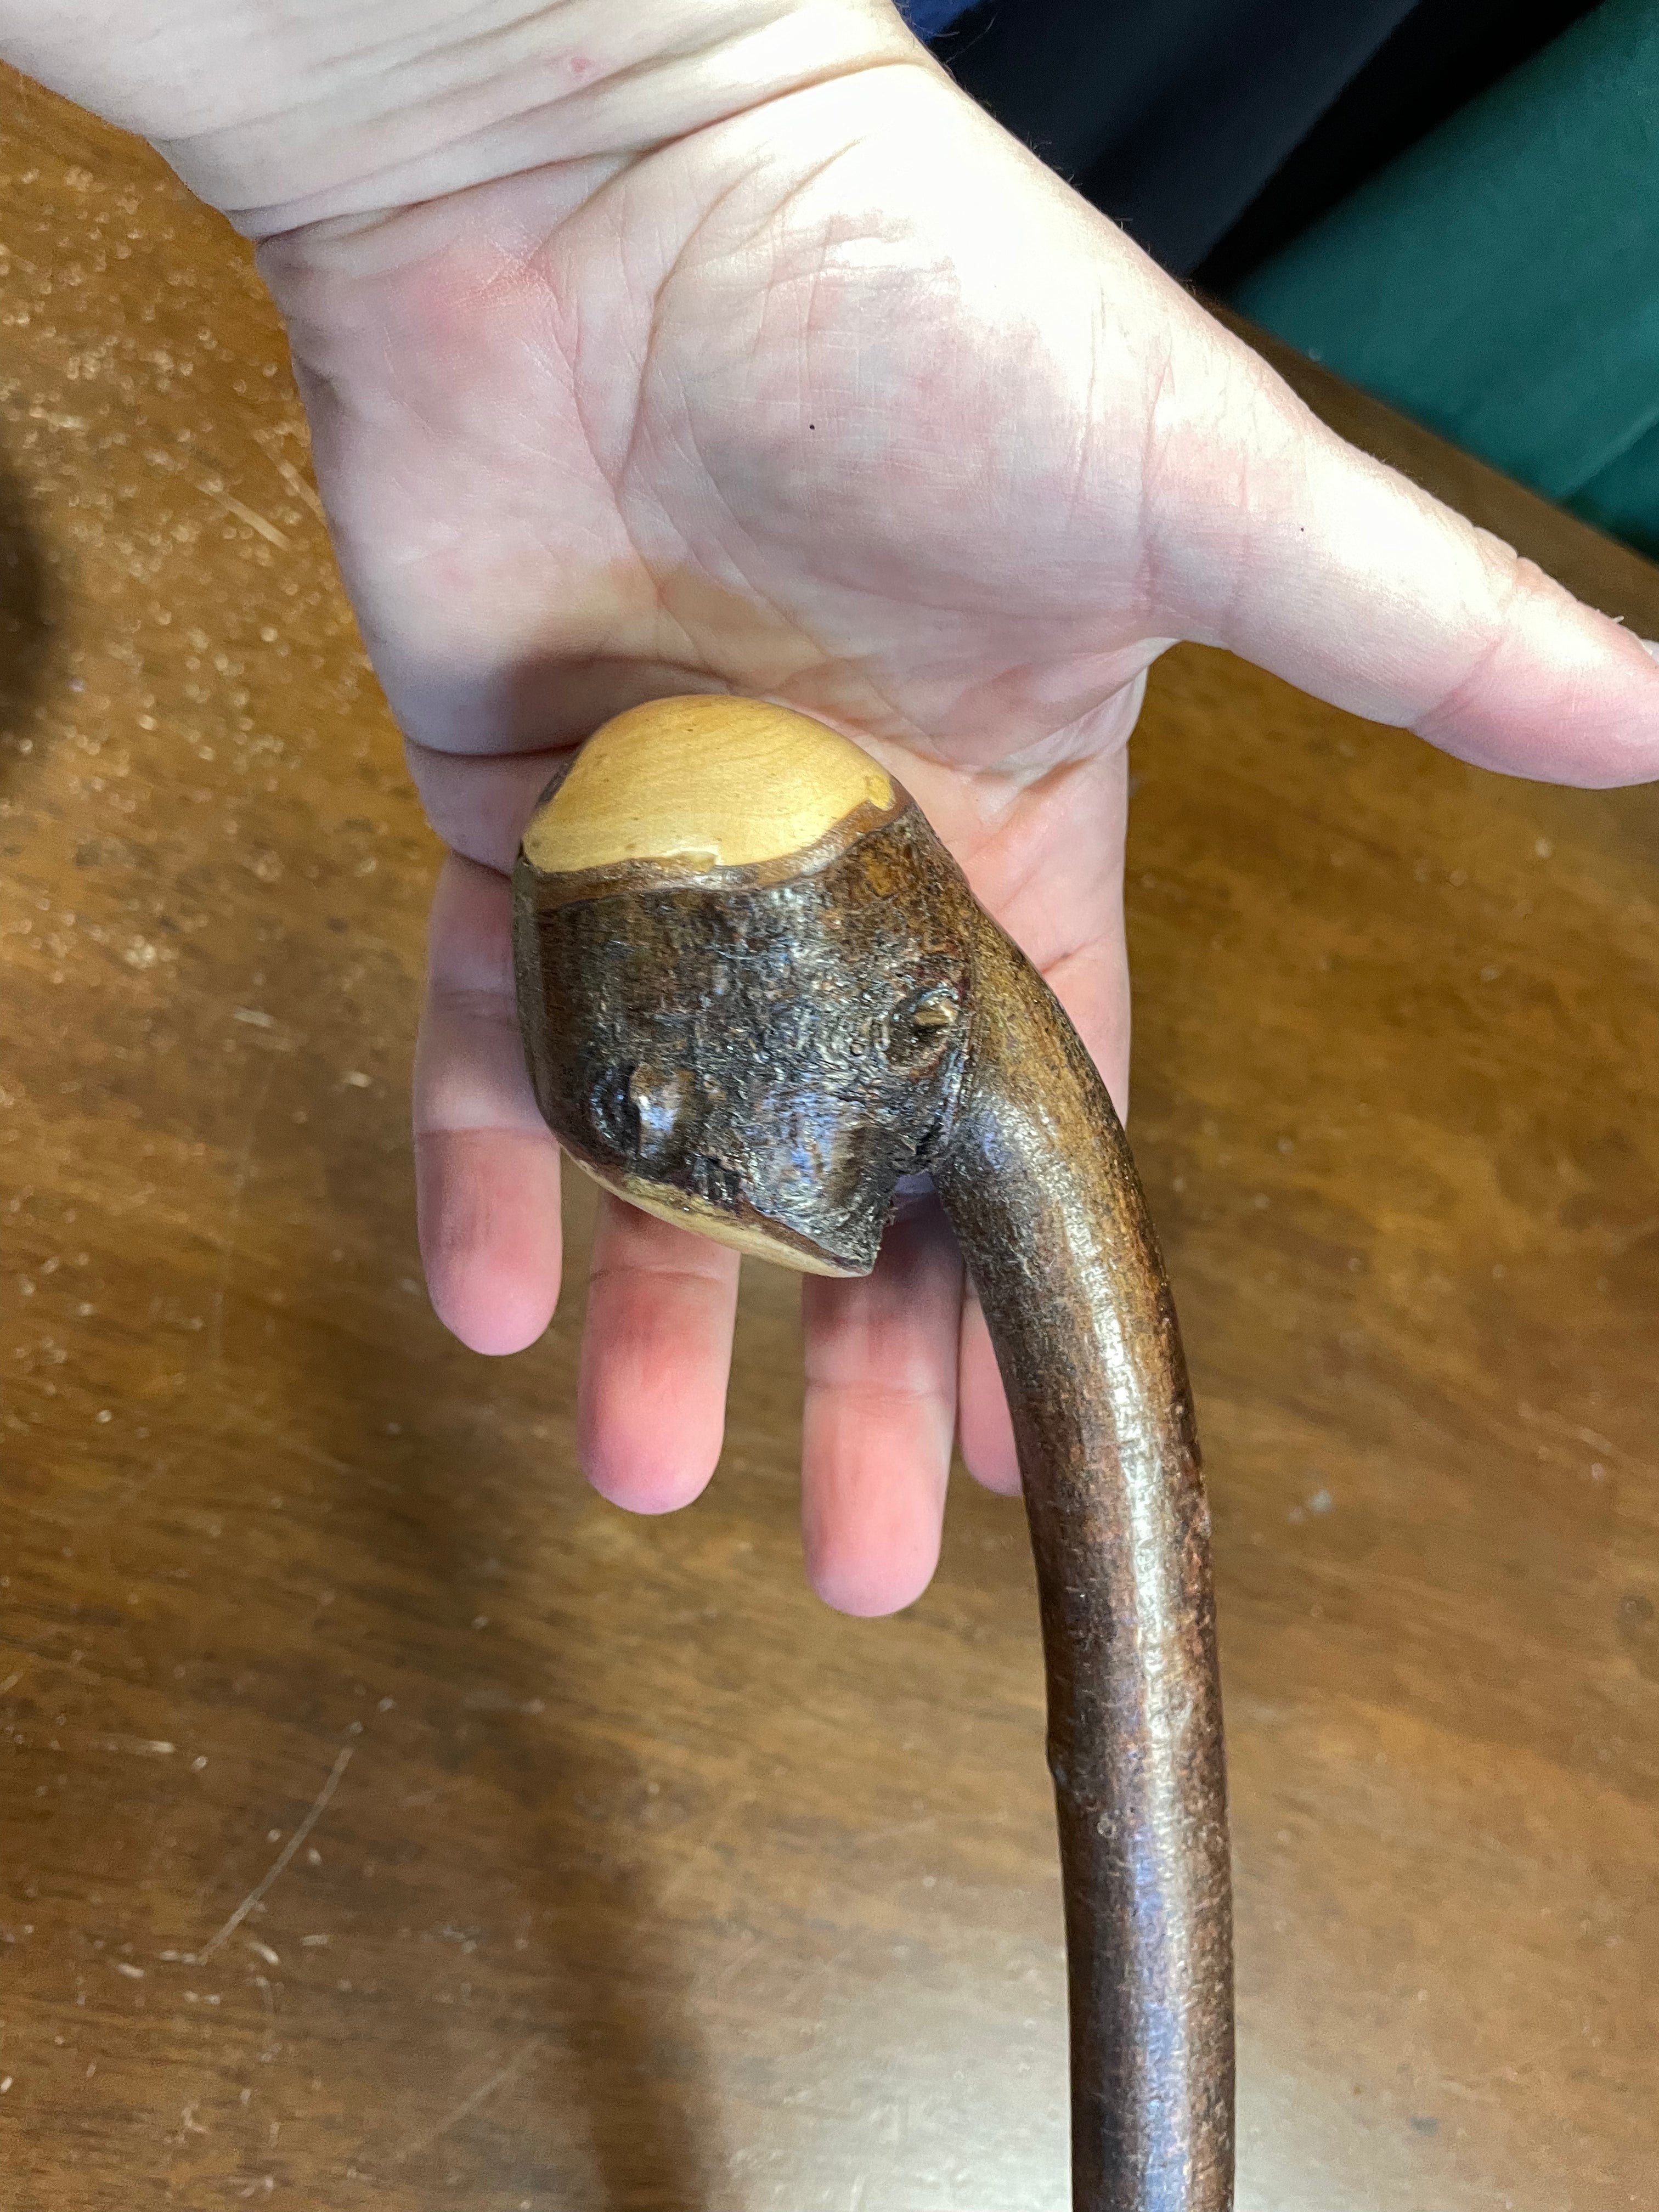 Blackthorn Shillelagh - 19 3/4 inch - Handmade in Ireland